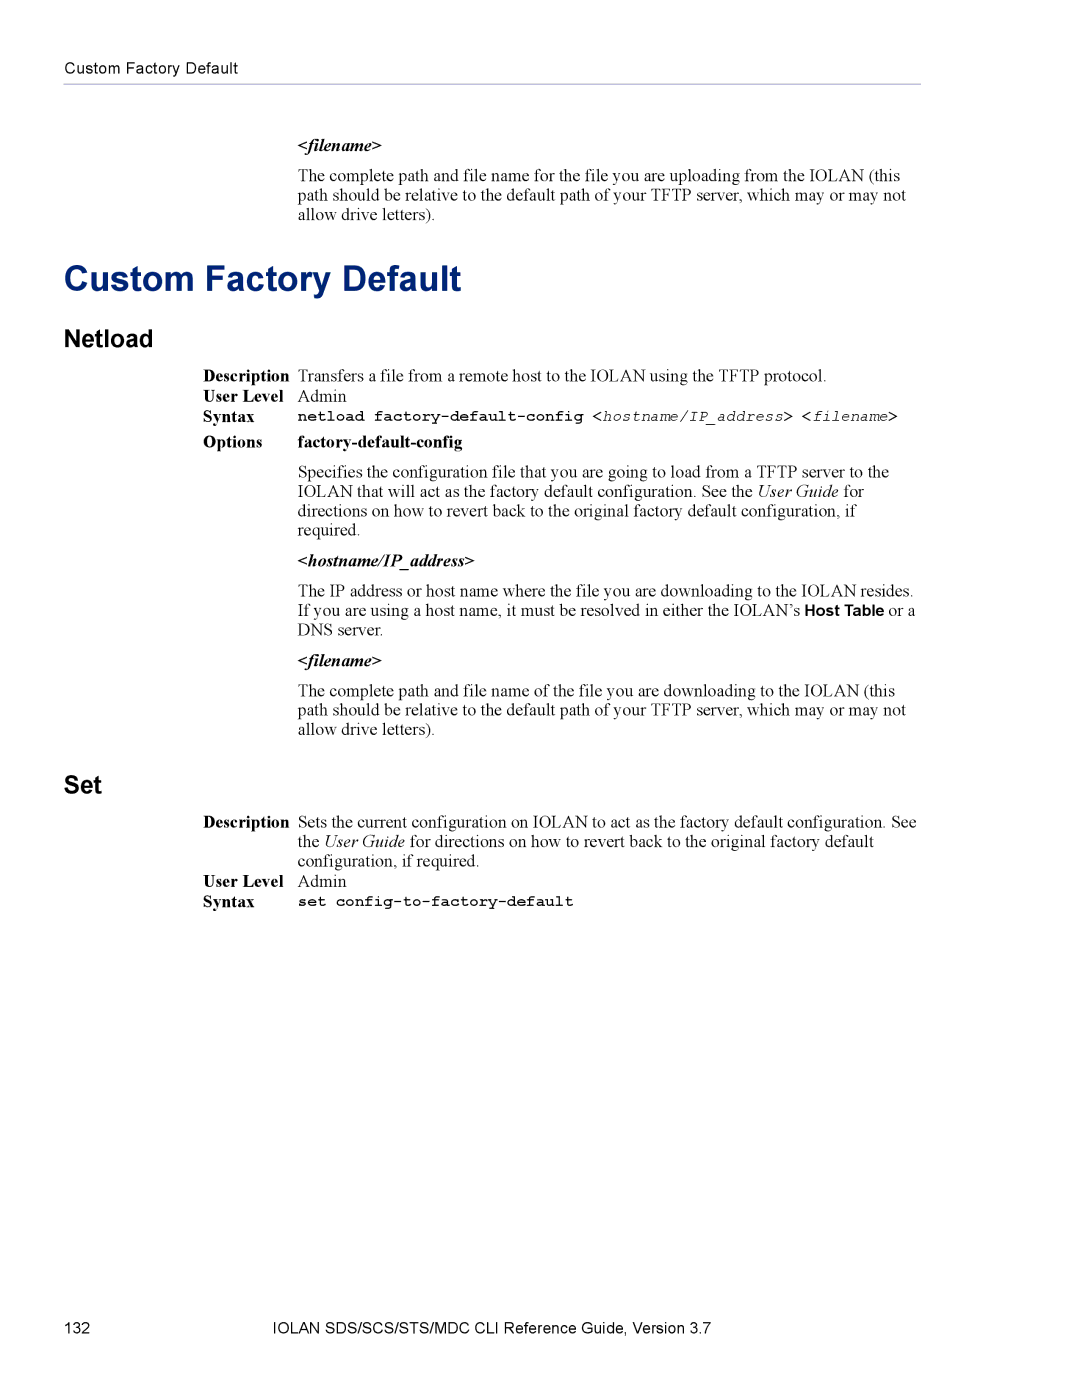 Perle Systems SDS, MDC manual Custom Factory Default, Set, Options Factory-default-config 